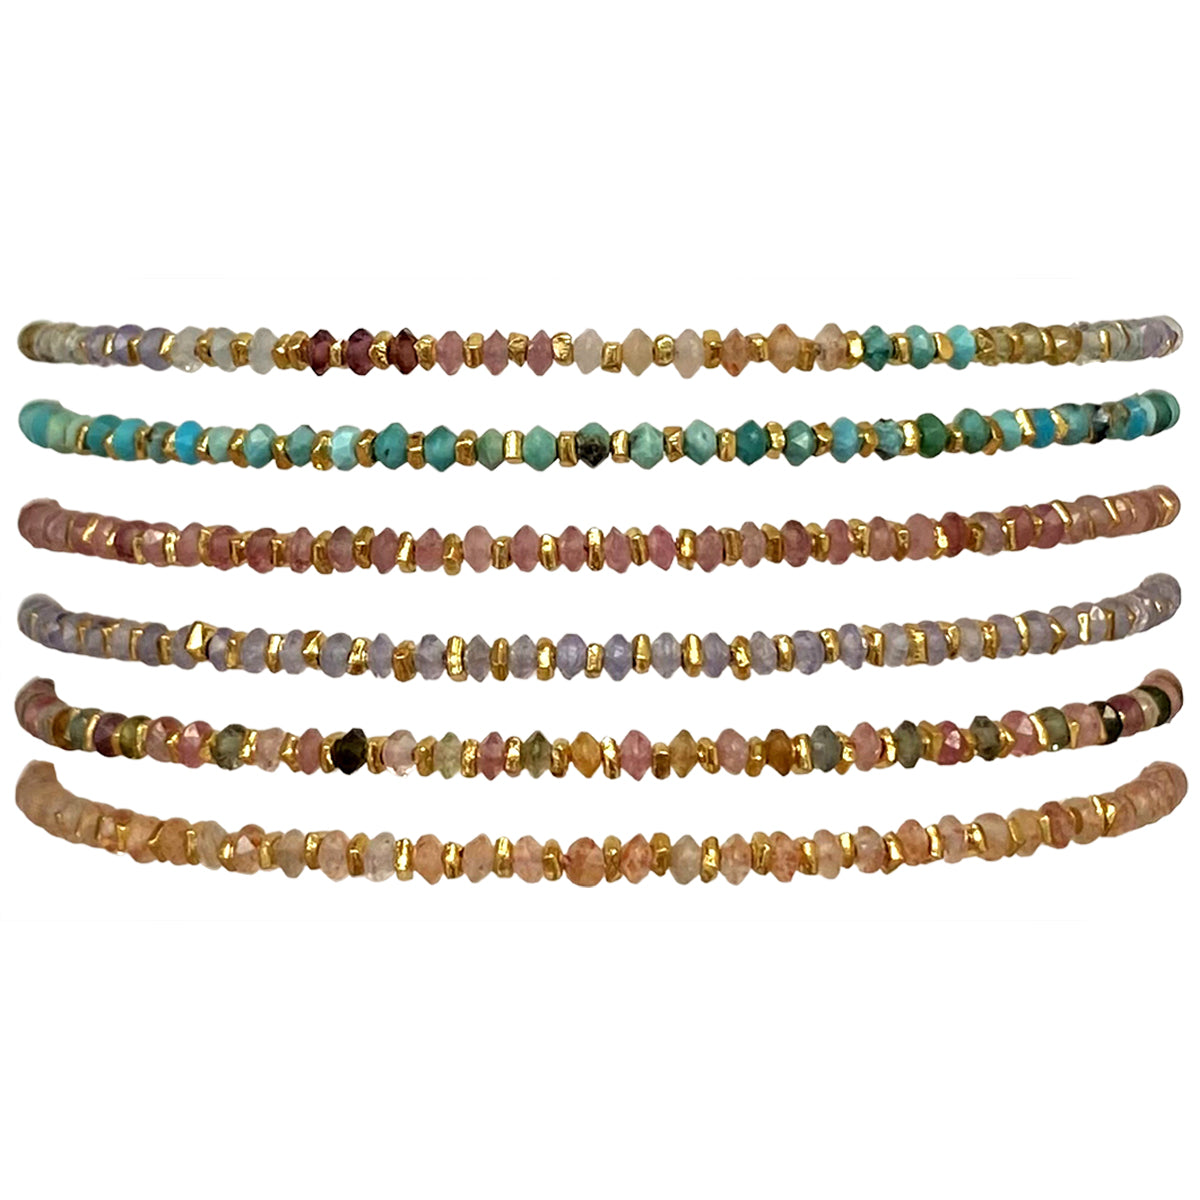 Handmade Violet Women's Bracelet Featuring Gold and Tsavorite Stones